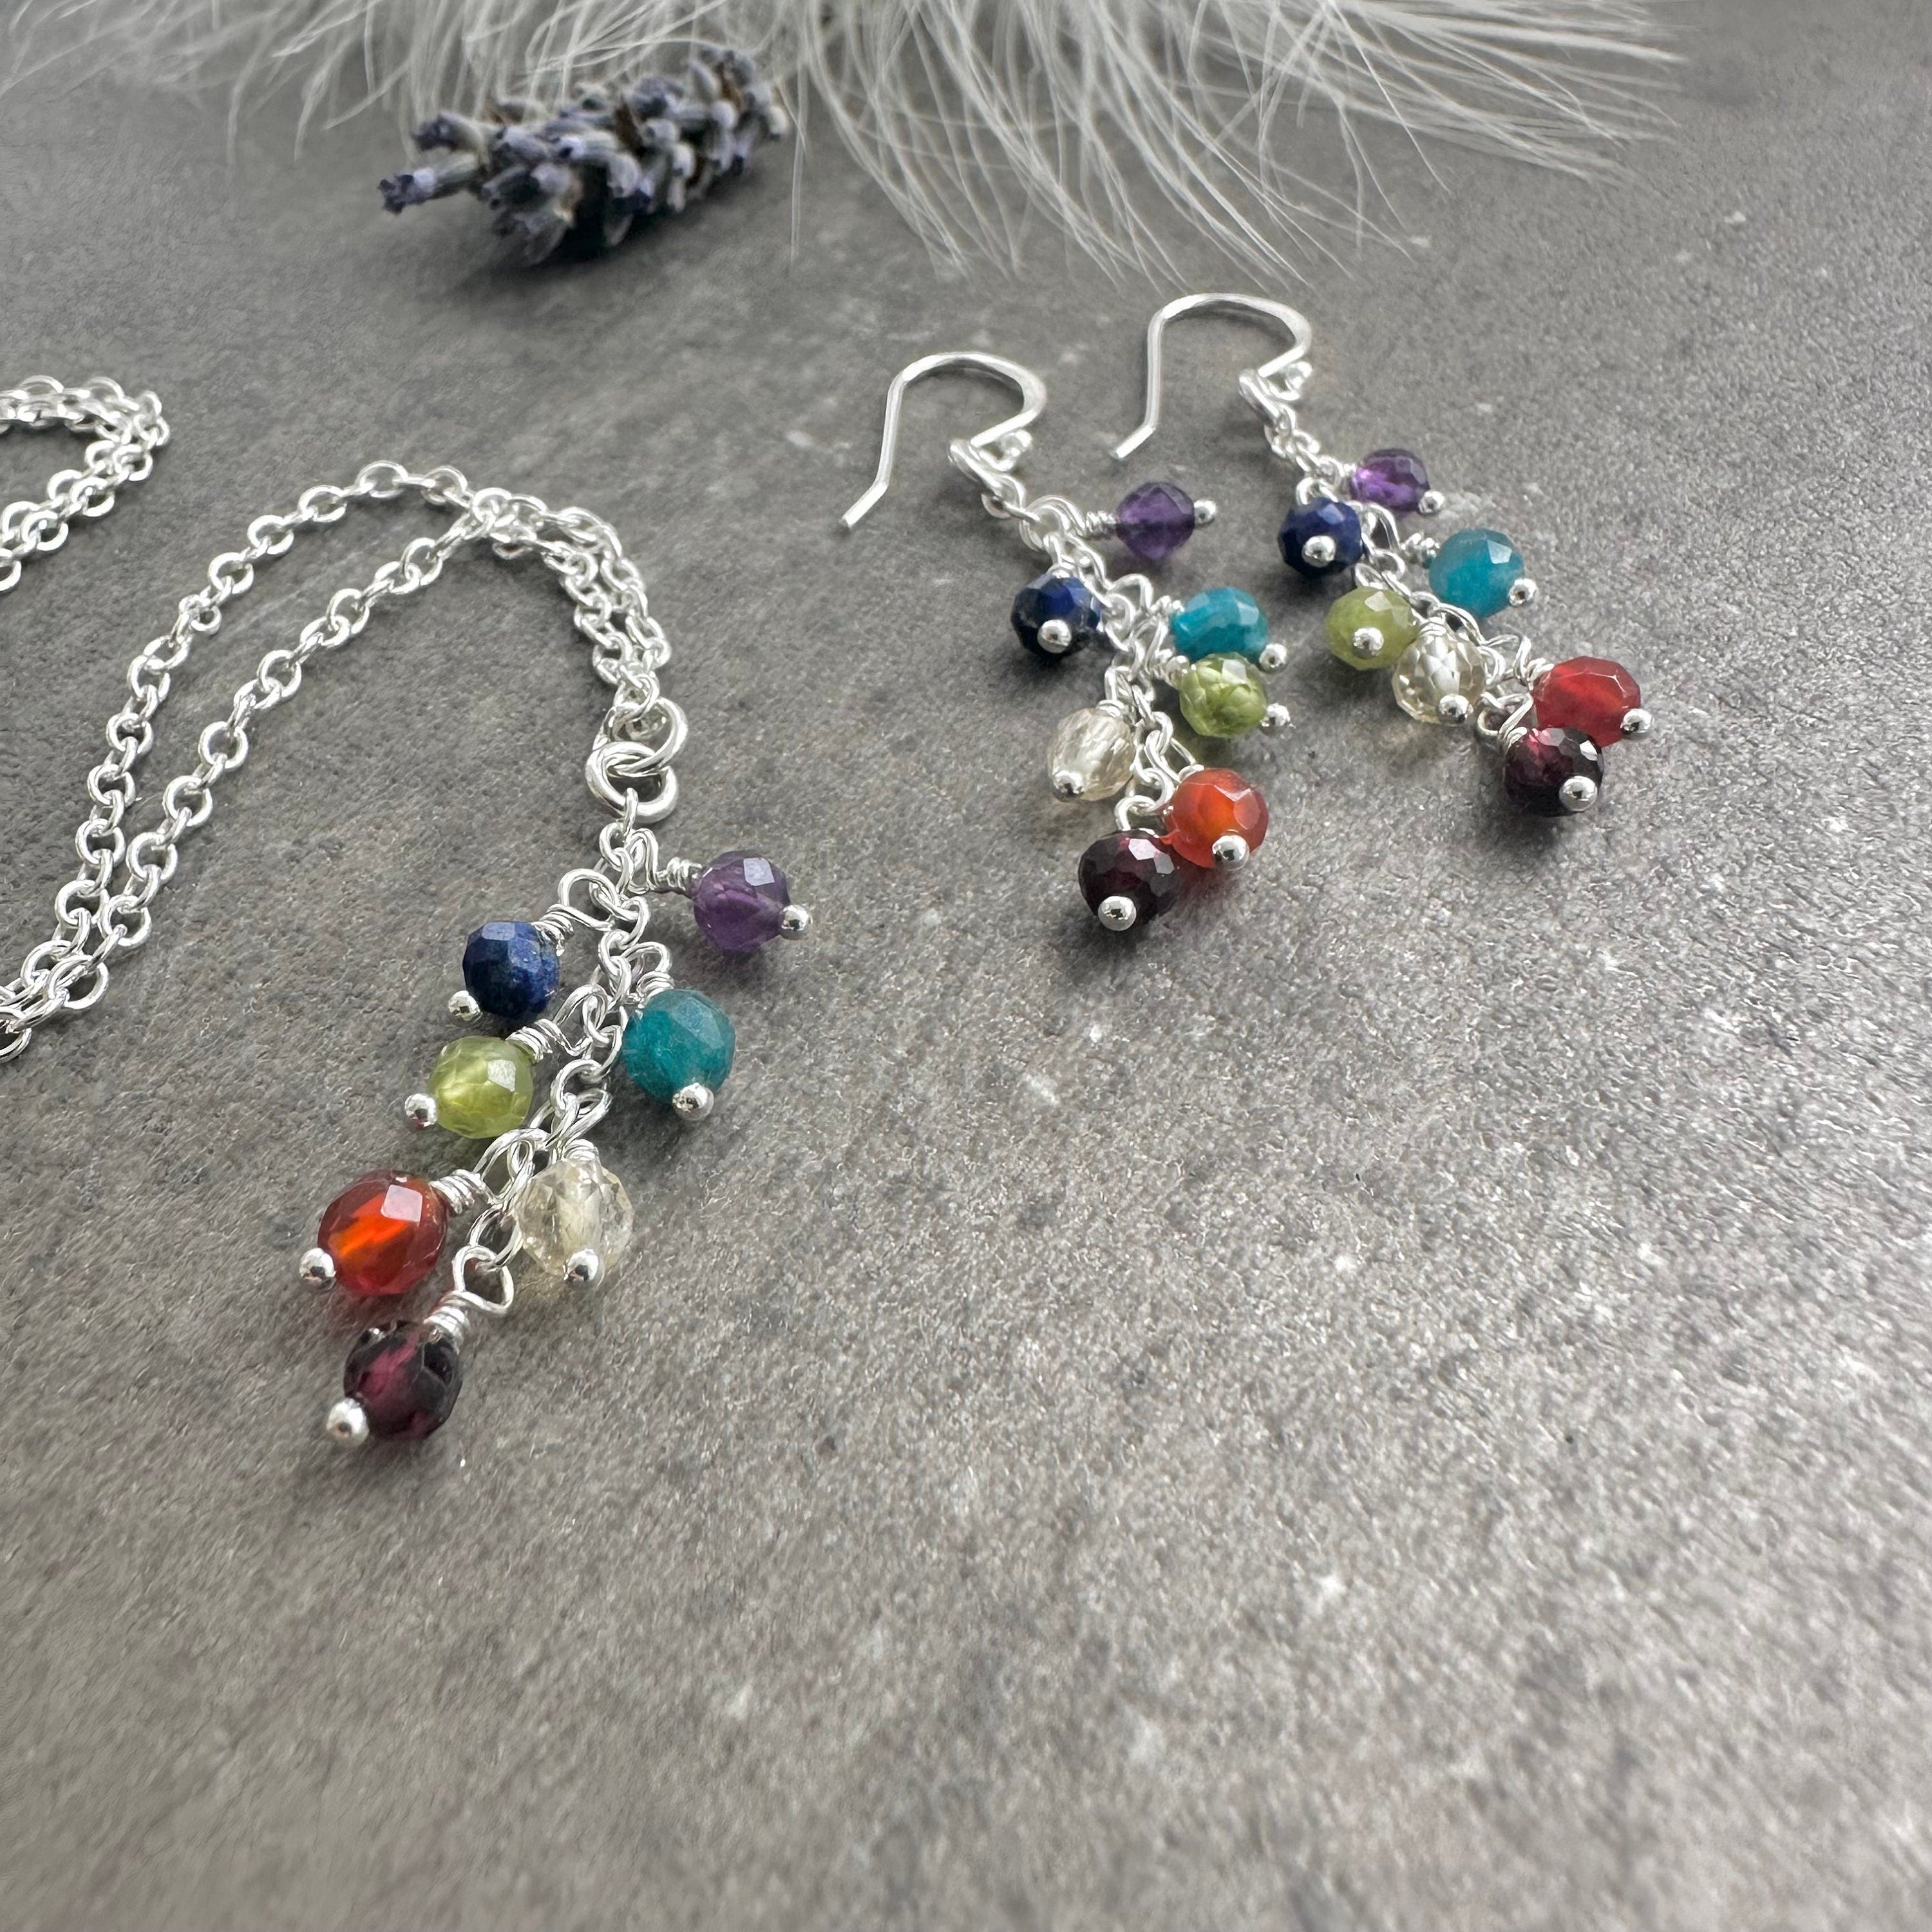 RAINBOW EARRINGS - 8mm Striped Acrylic Beads on Silver Tone Nickel Free  Hooks - LGBT Pride : 32mm : Amazon.co.uk: Handmade Products